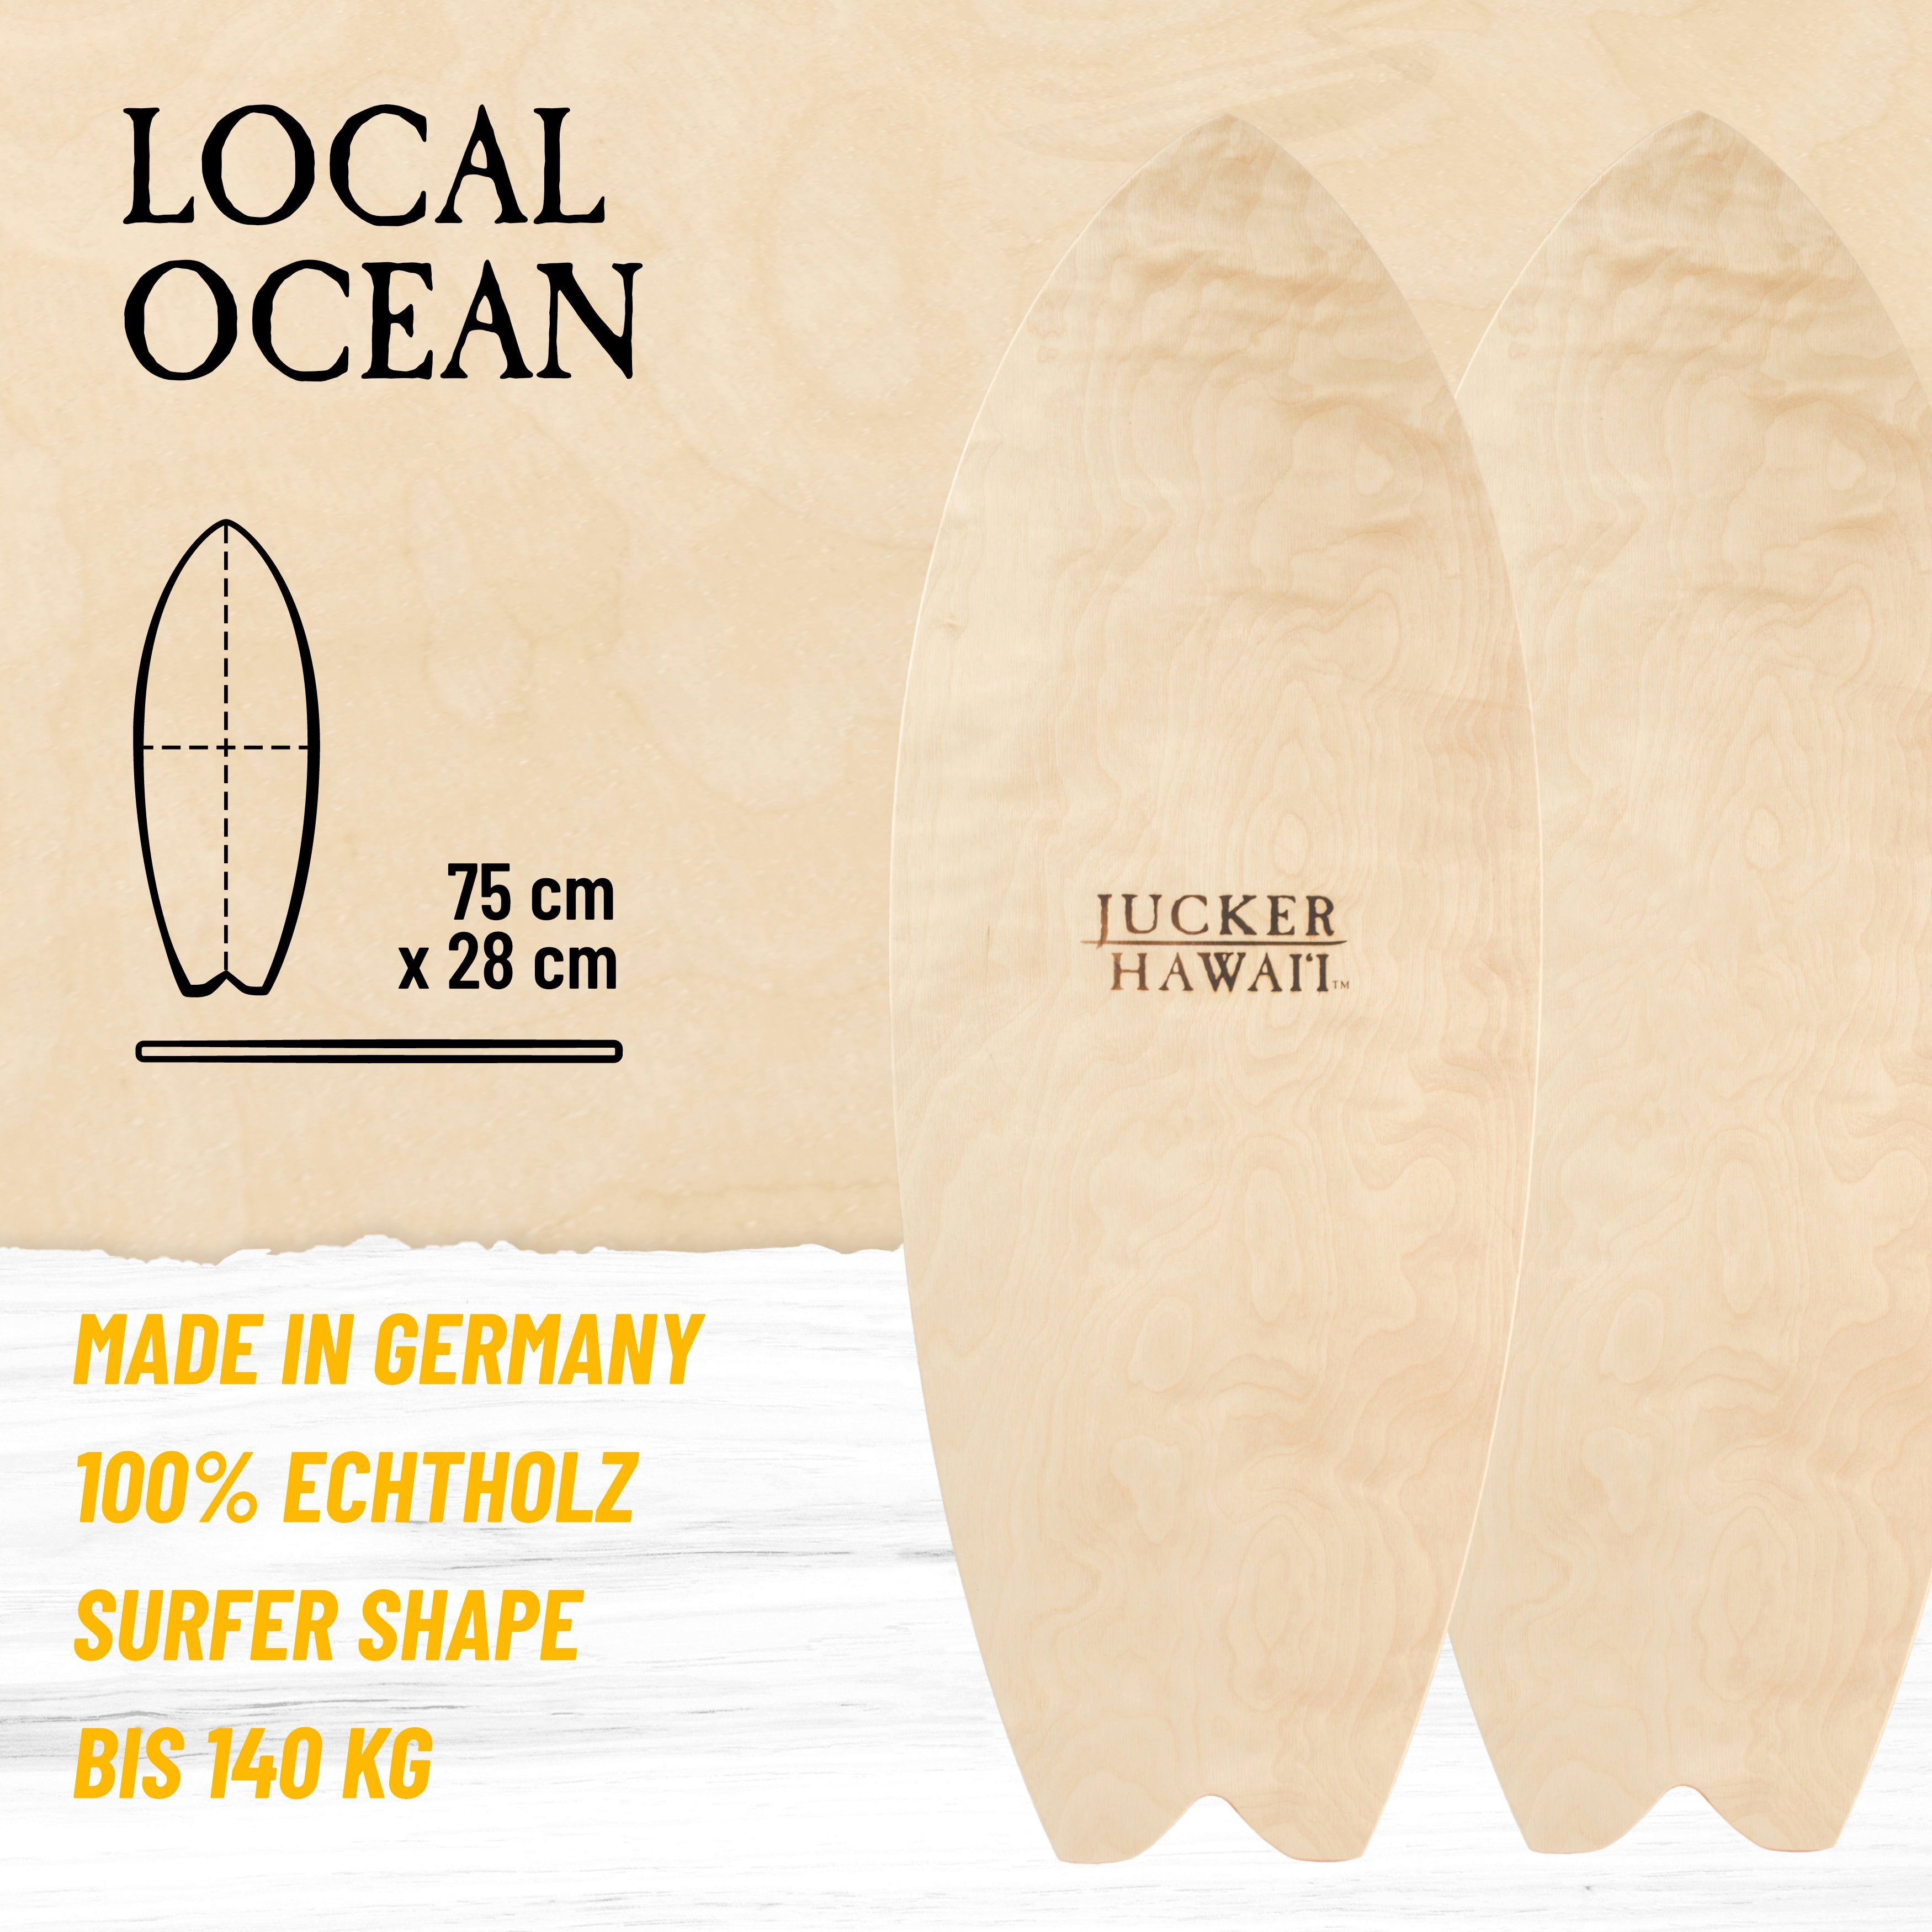 Ocean Board Korkrolle aus Echtholz Germany 100% Local JUCKER inklusive Balance Made HAWAII Korkmatte, in Balanceboard und